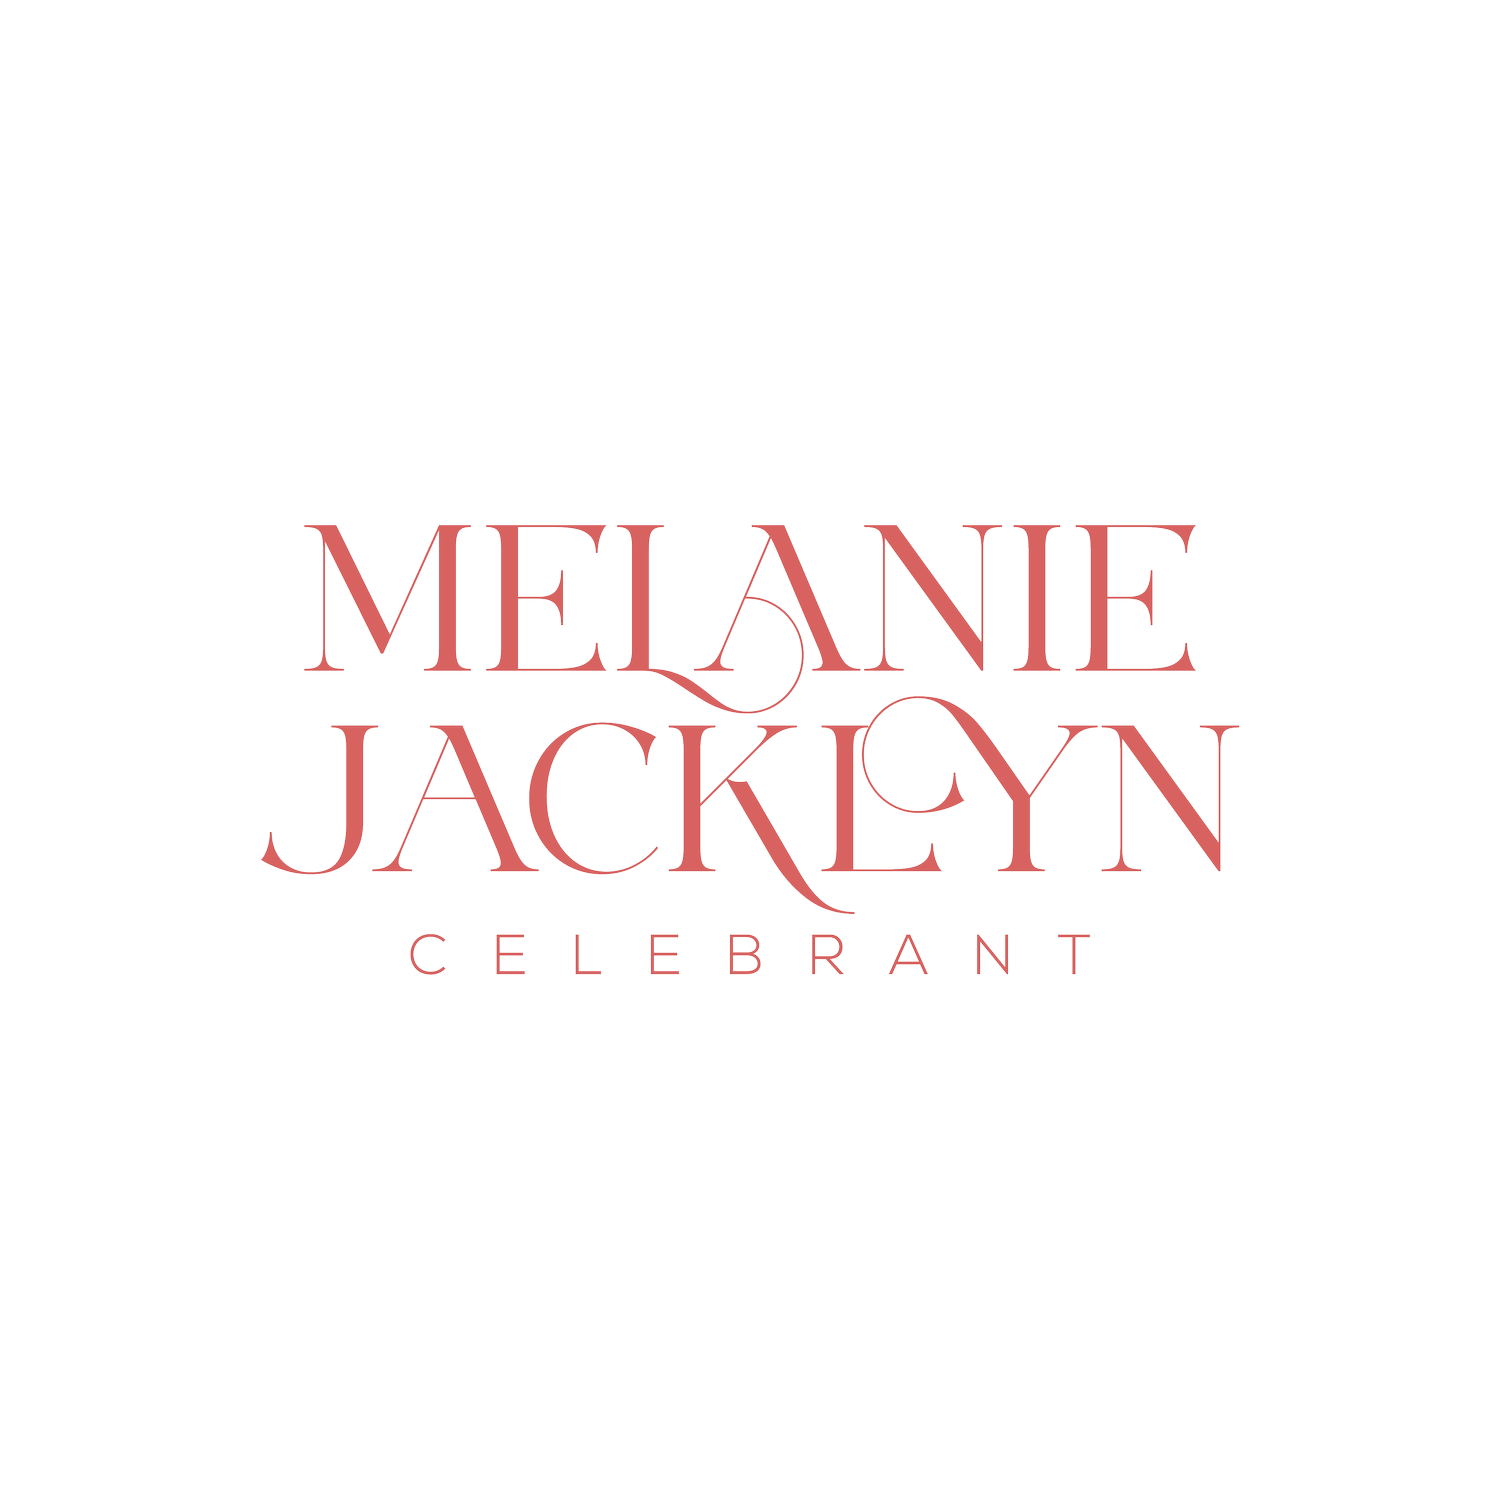 Melanie Jacklyn Celebrant